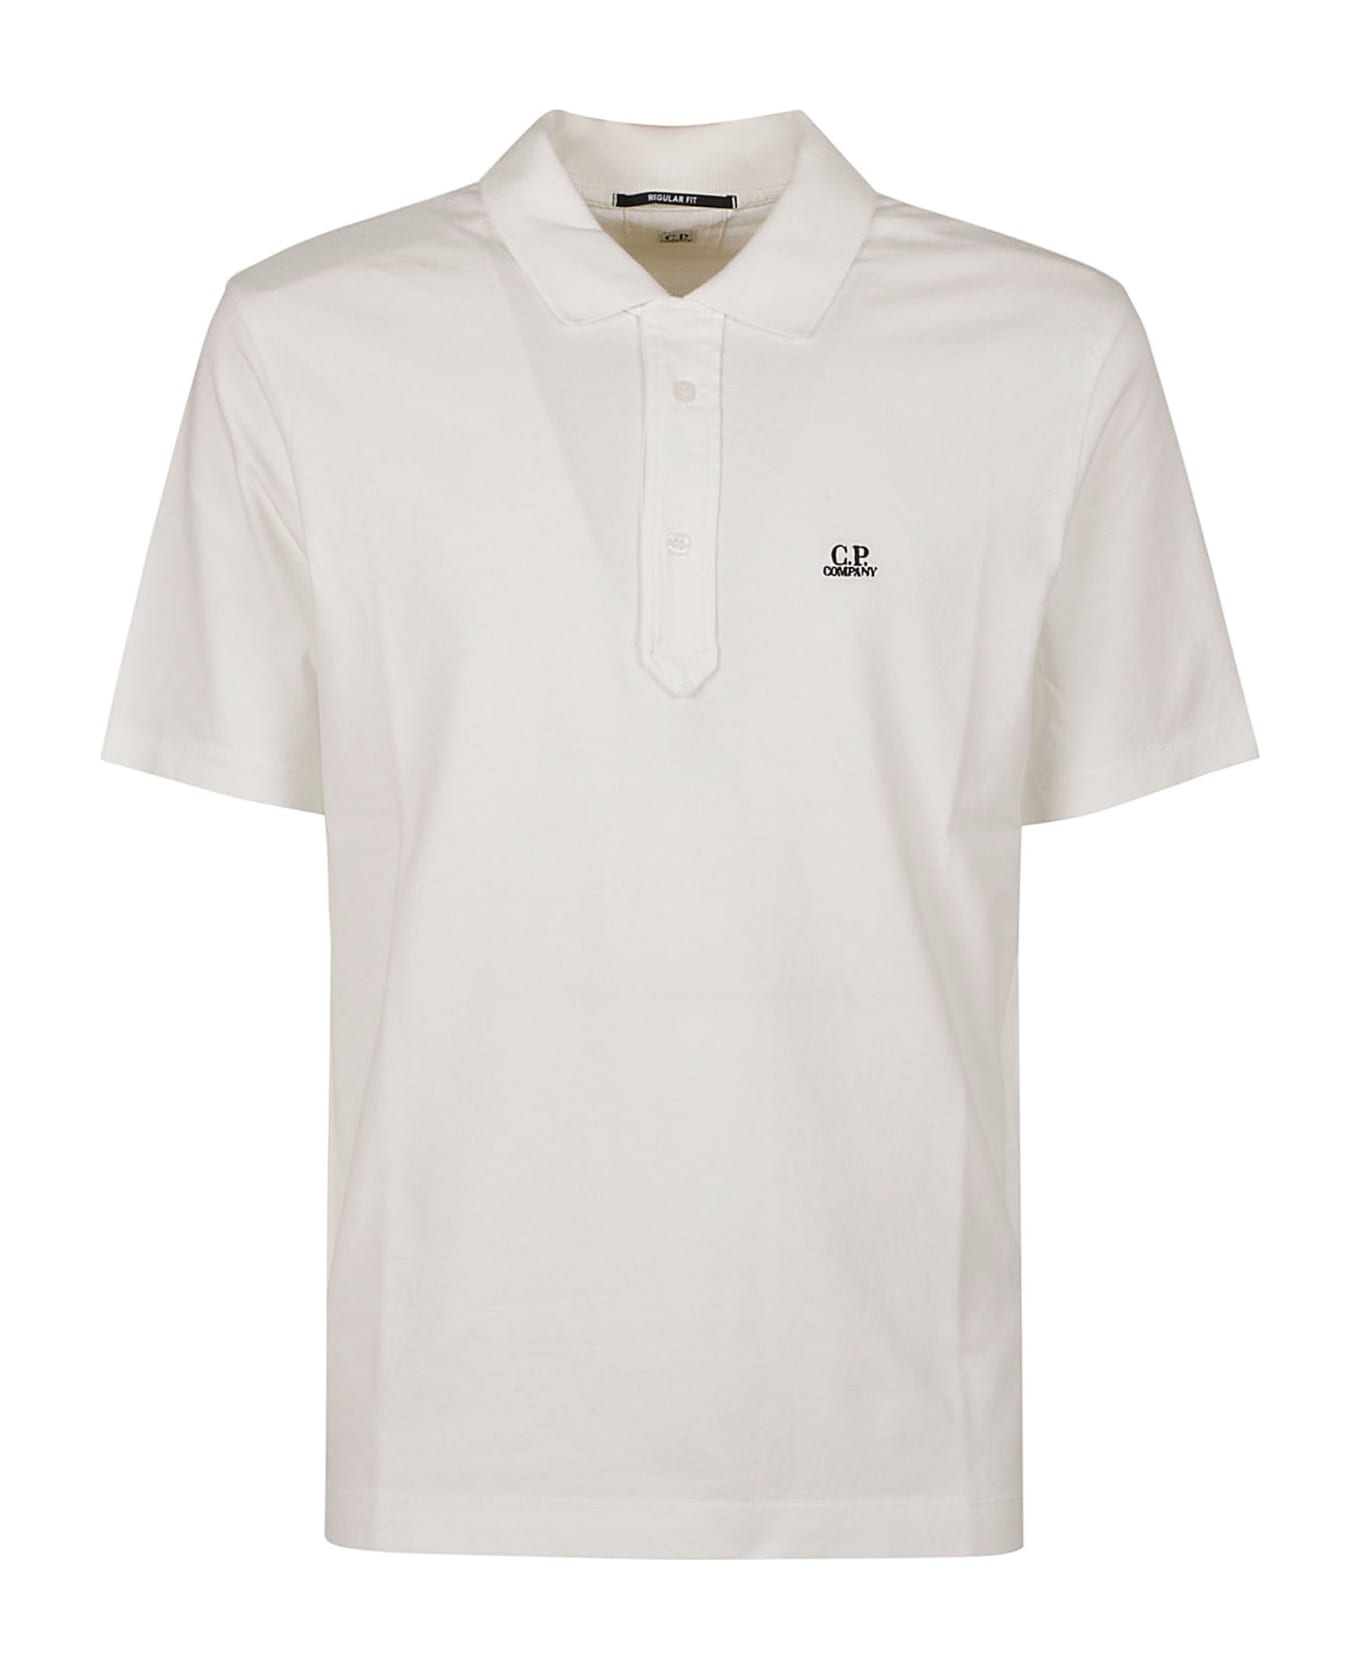 C.P. Company 1020 Short-sleeved Polo Shirt - Gauze white